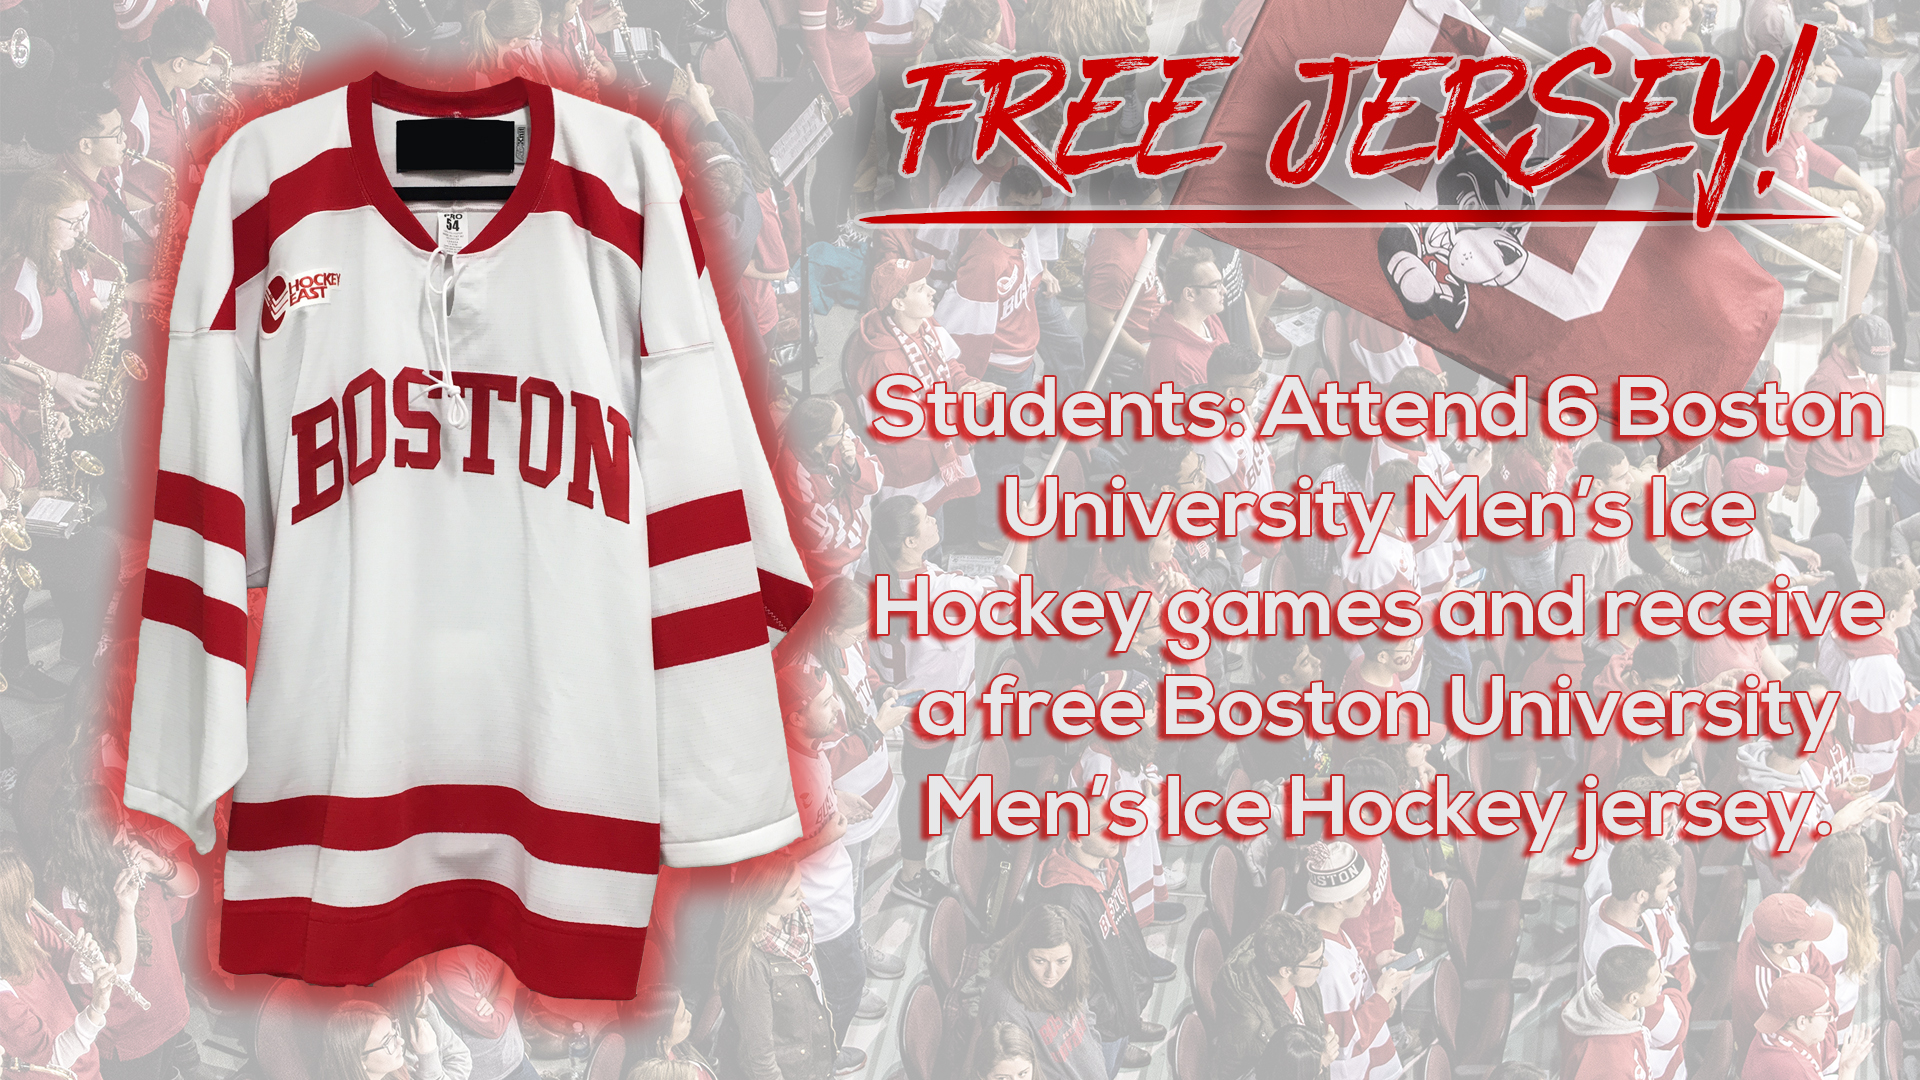 boston university hockey jersey for sale